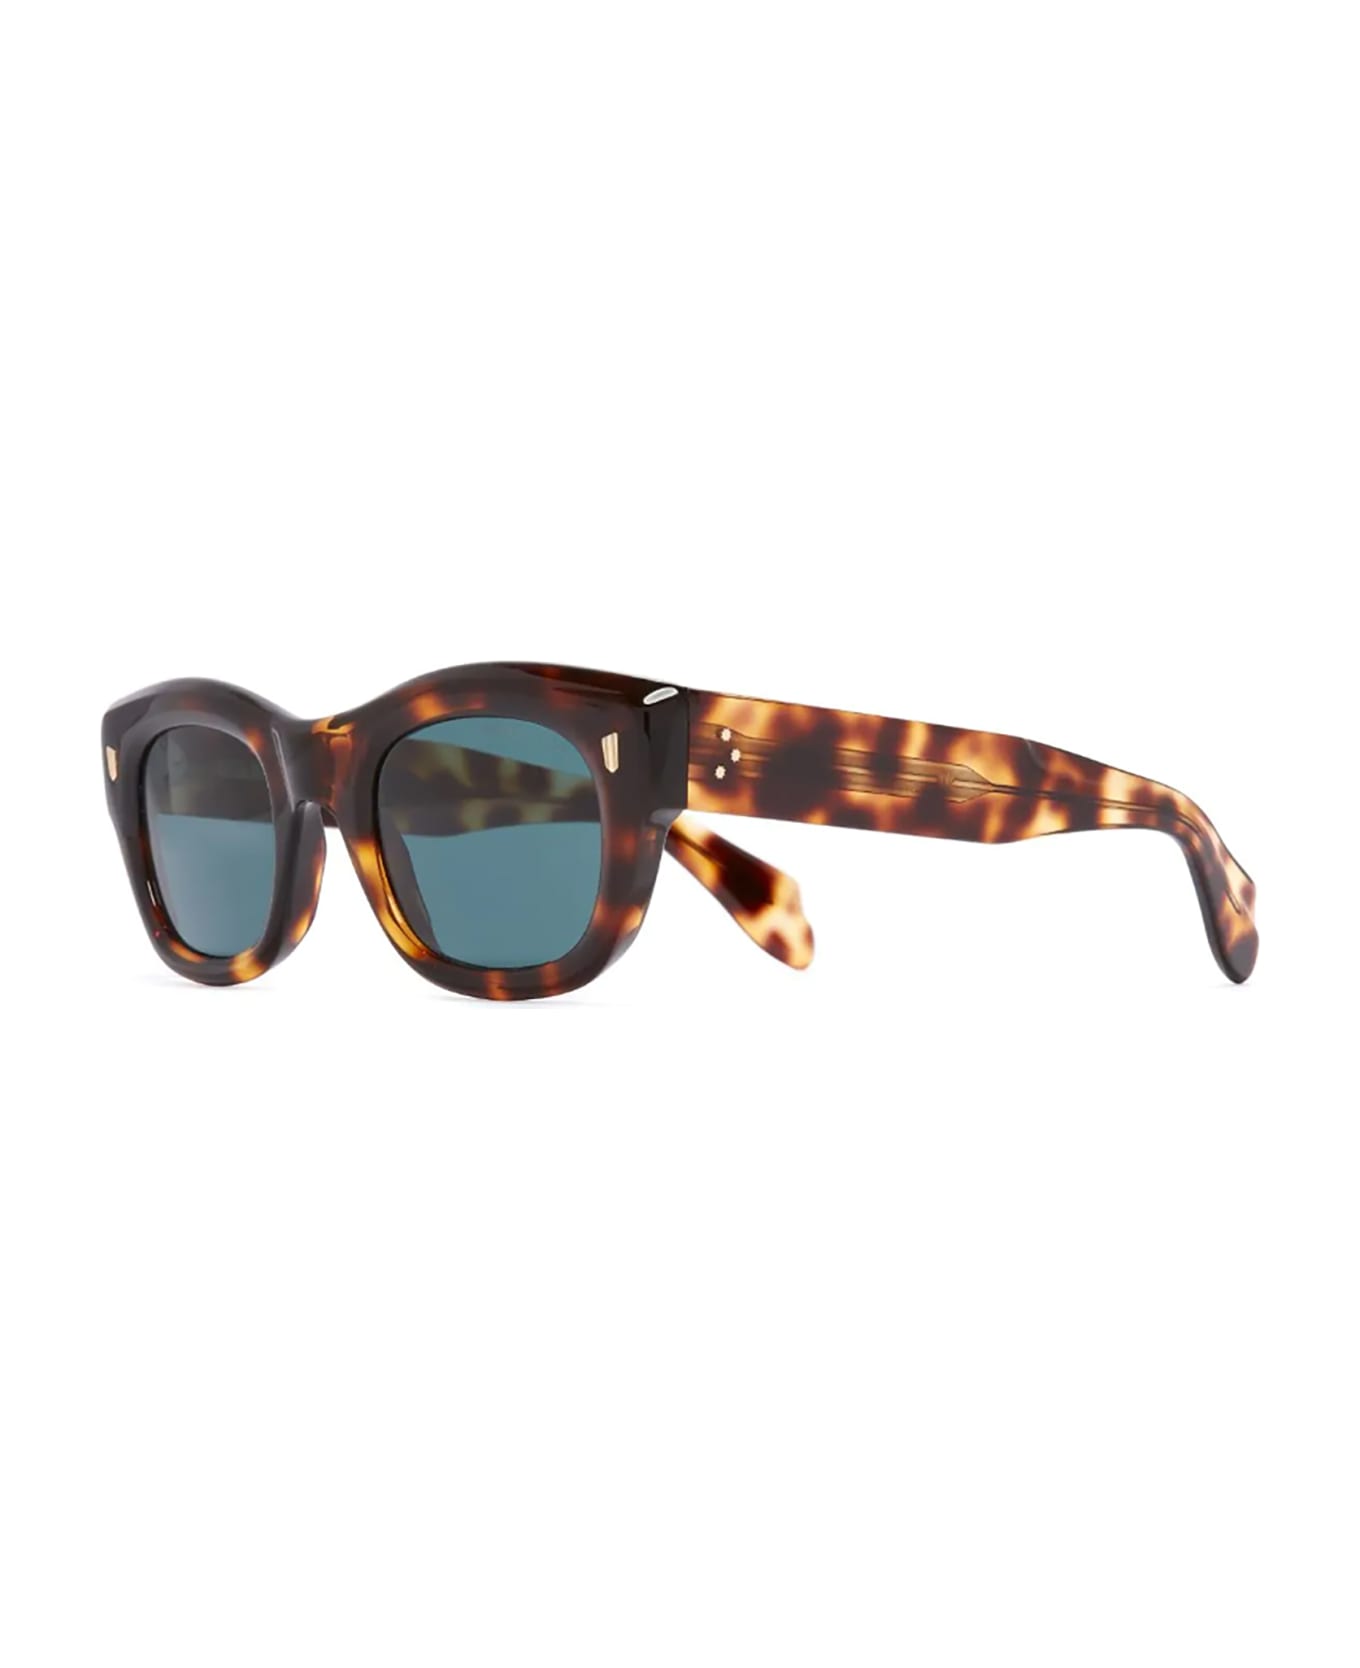 Cutler and Gross 9261 Sunglasses - Old Brown Havana